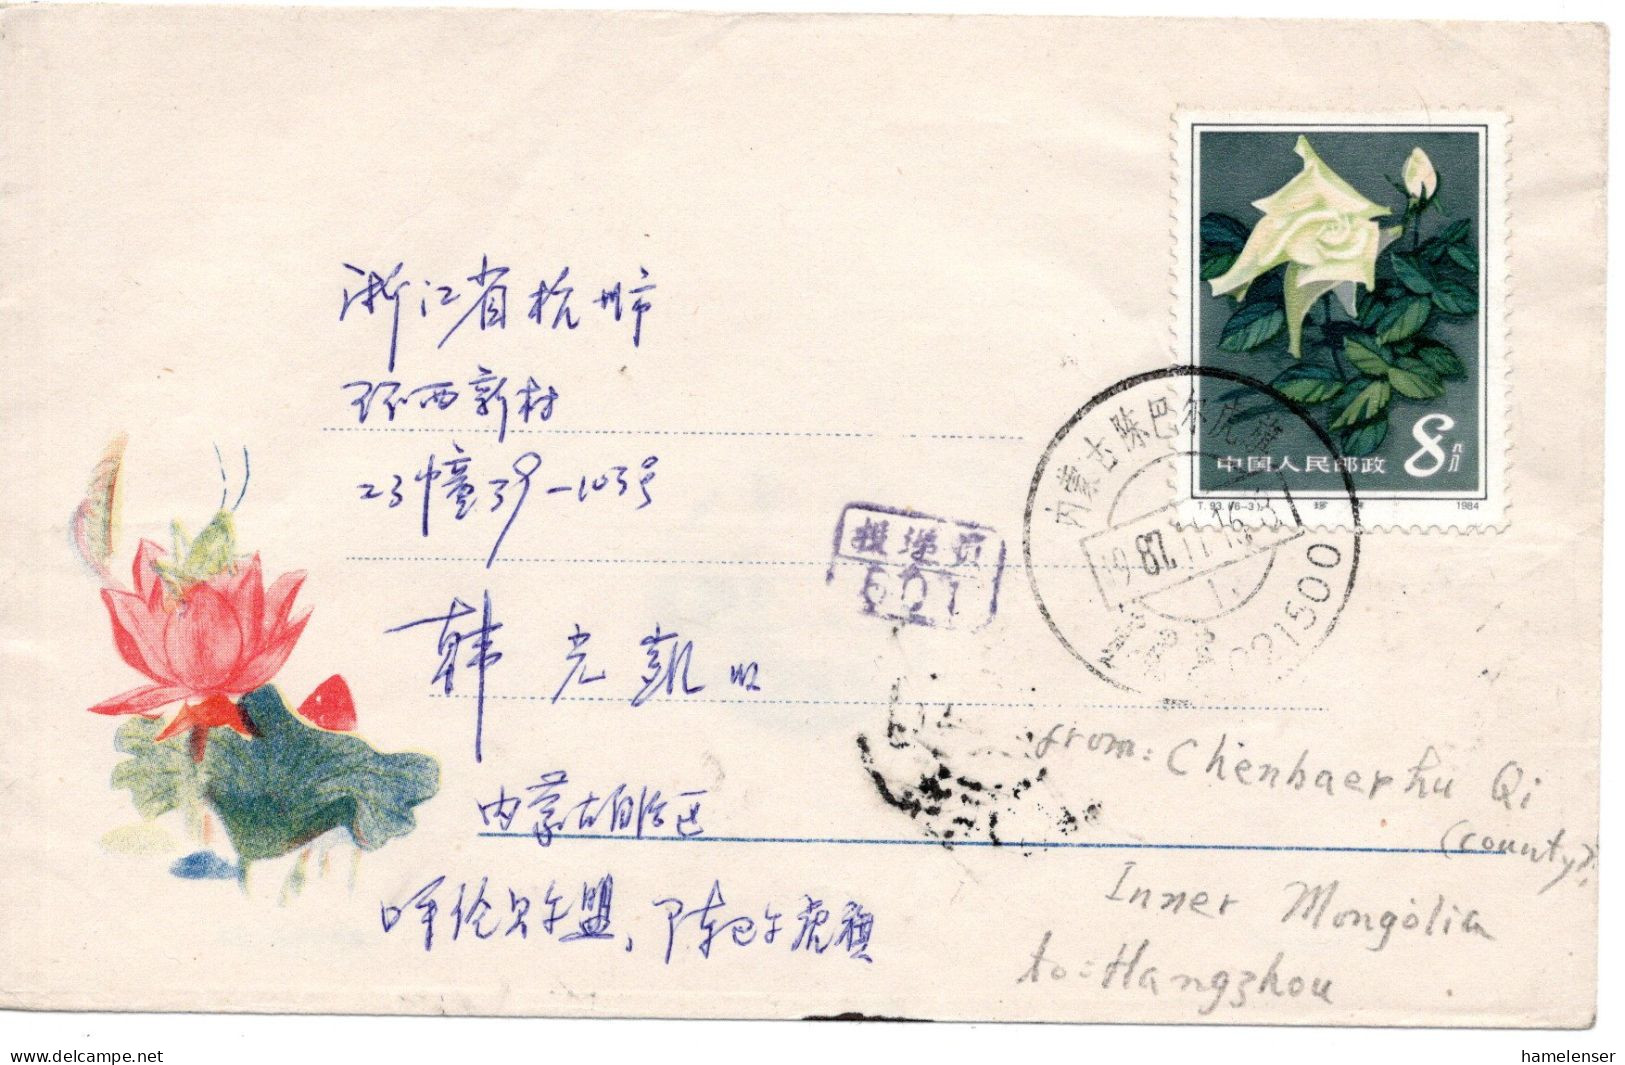 67600 - VR China - 1987 - 8f Rosen EF A Bf NEIMENGGU CHENHAERHU QI -> HANGZHOU - Briefe U. Dokumente